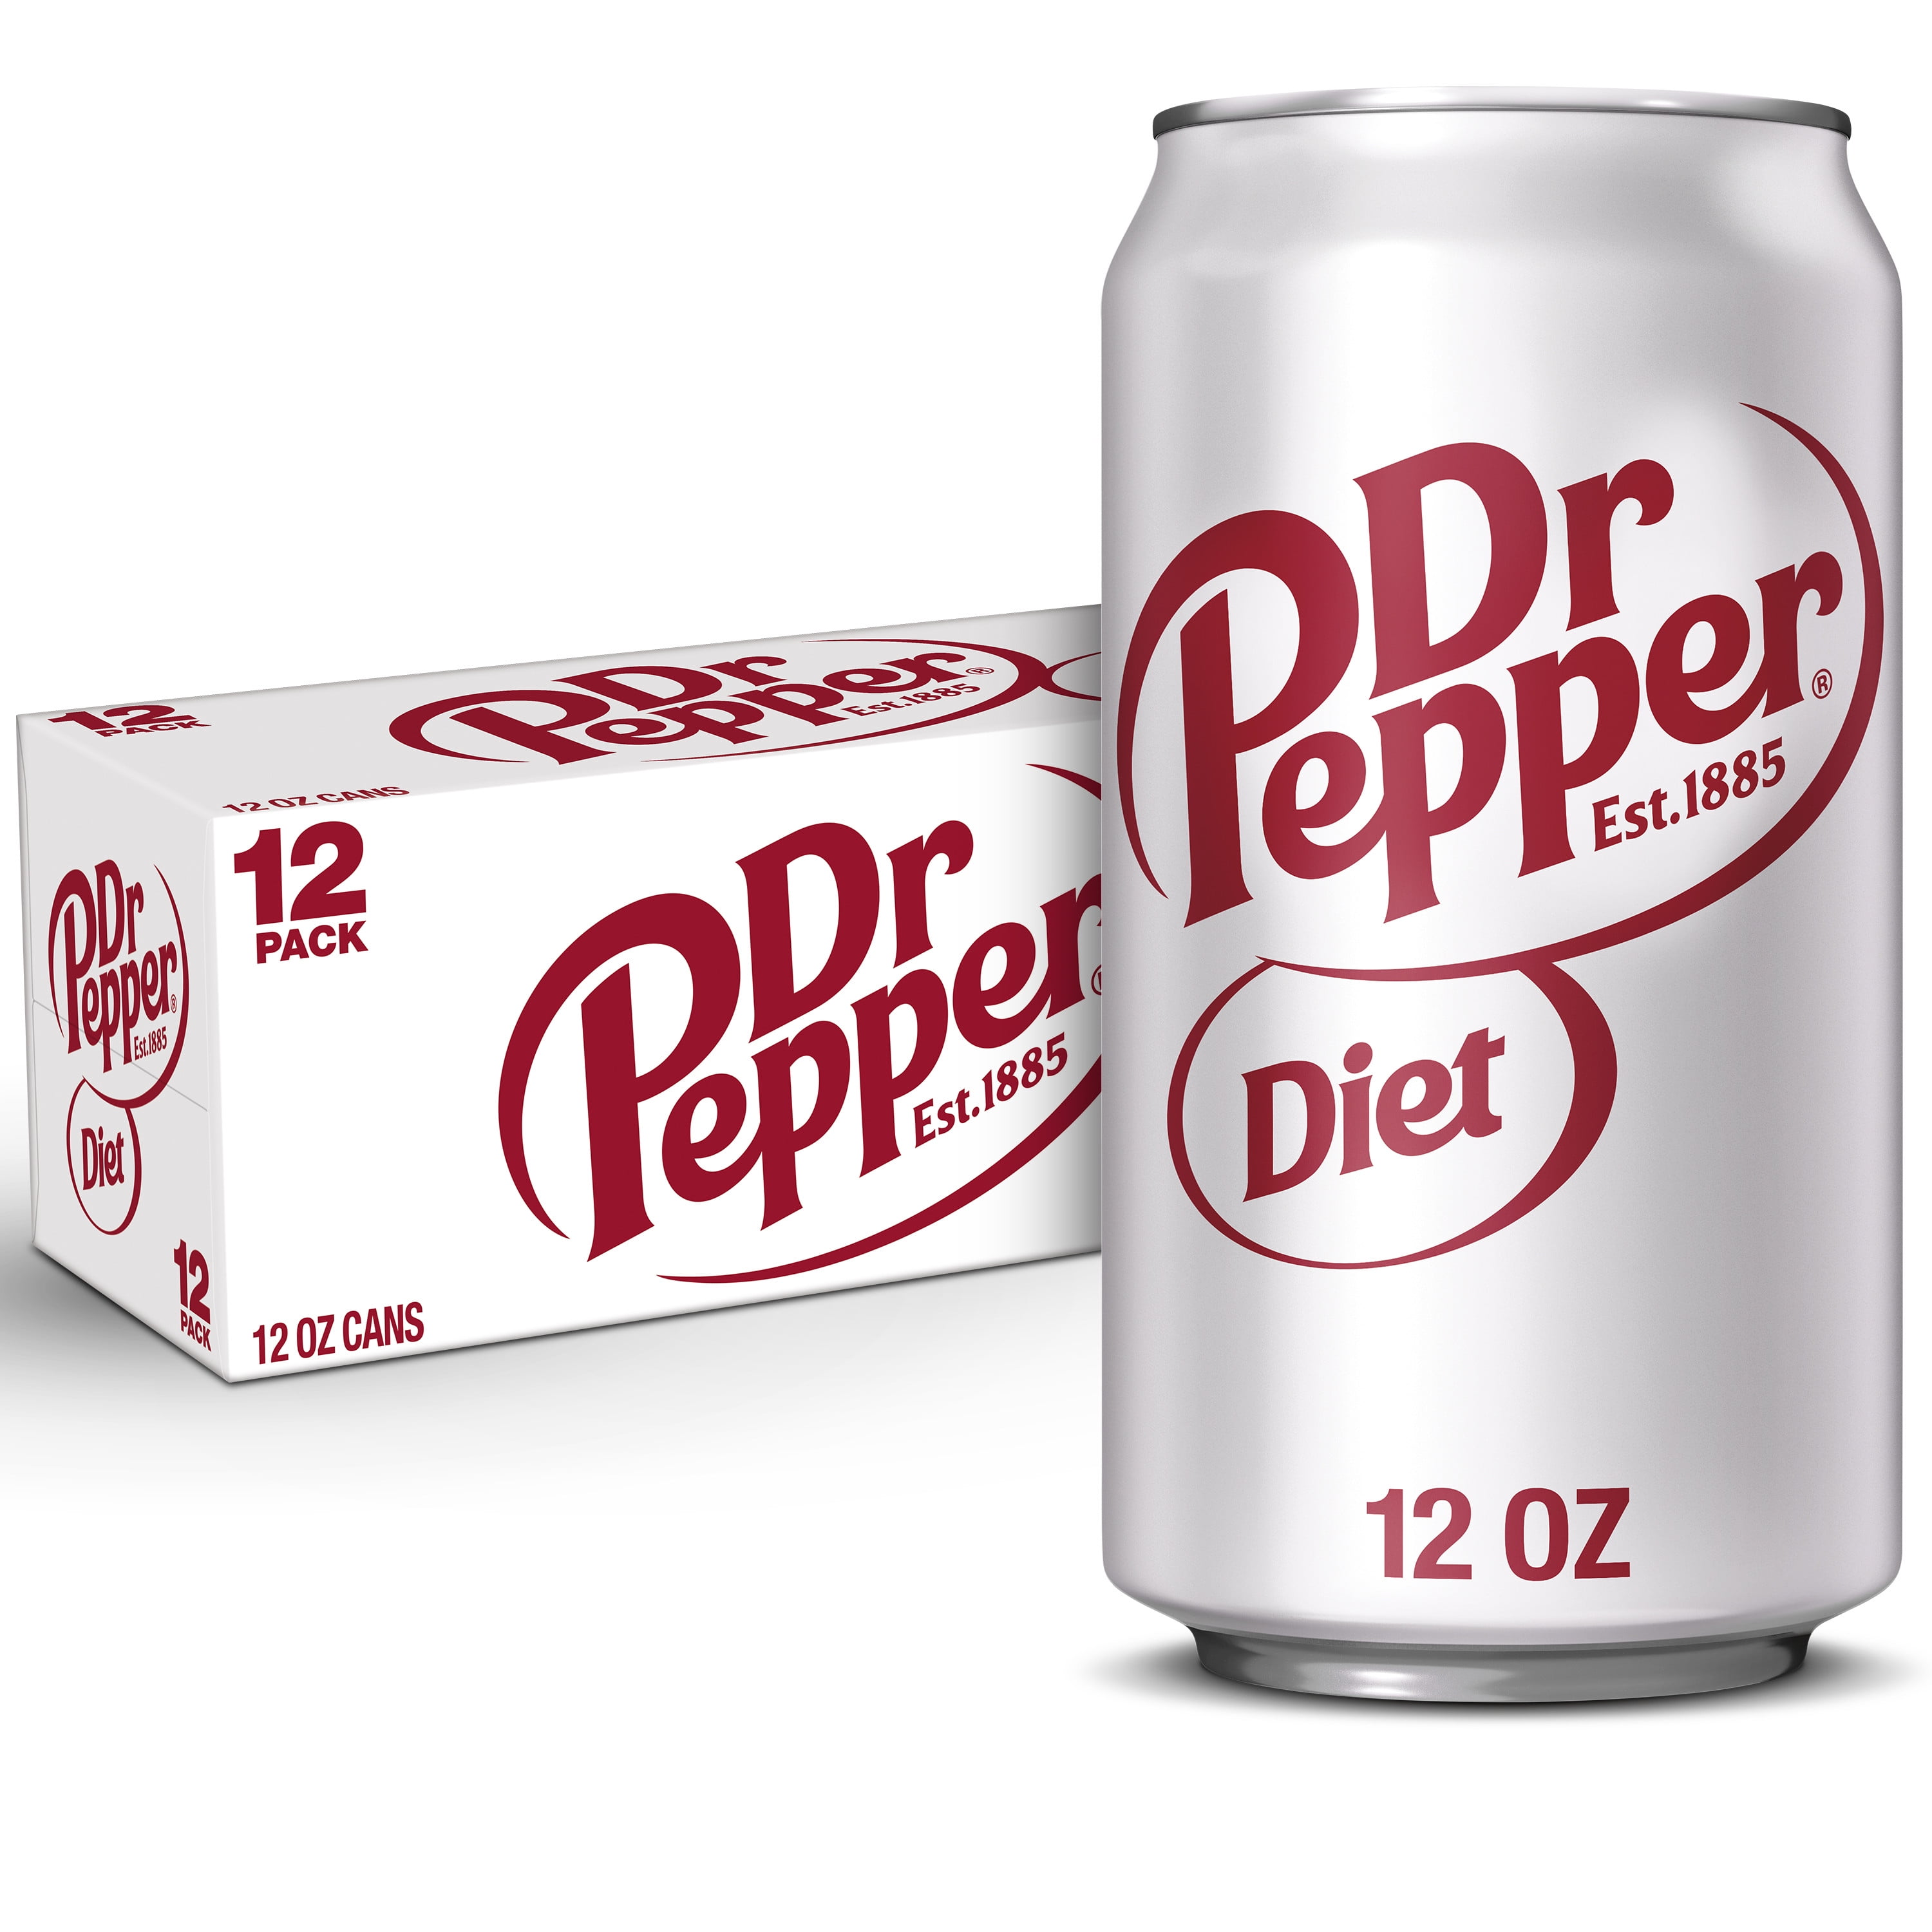 Diet dr pepper charge macbook pro apple cebu city